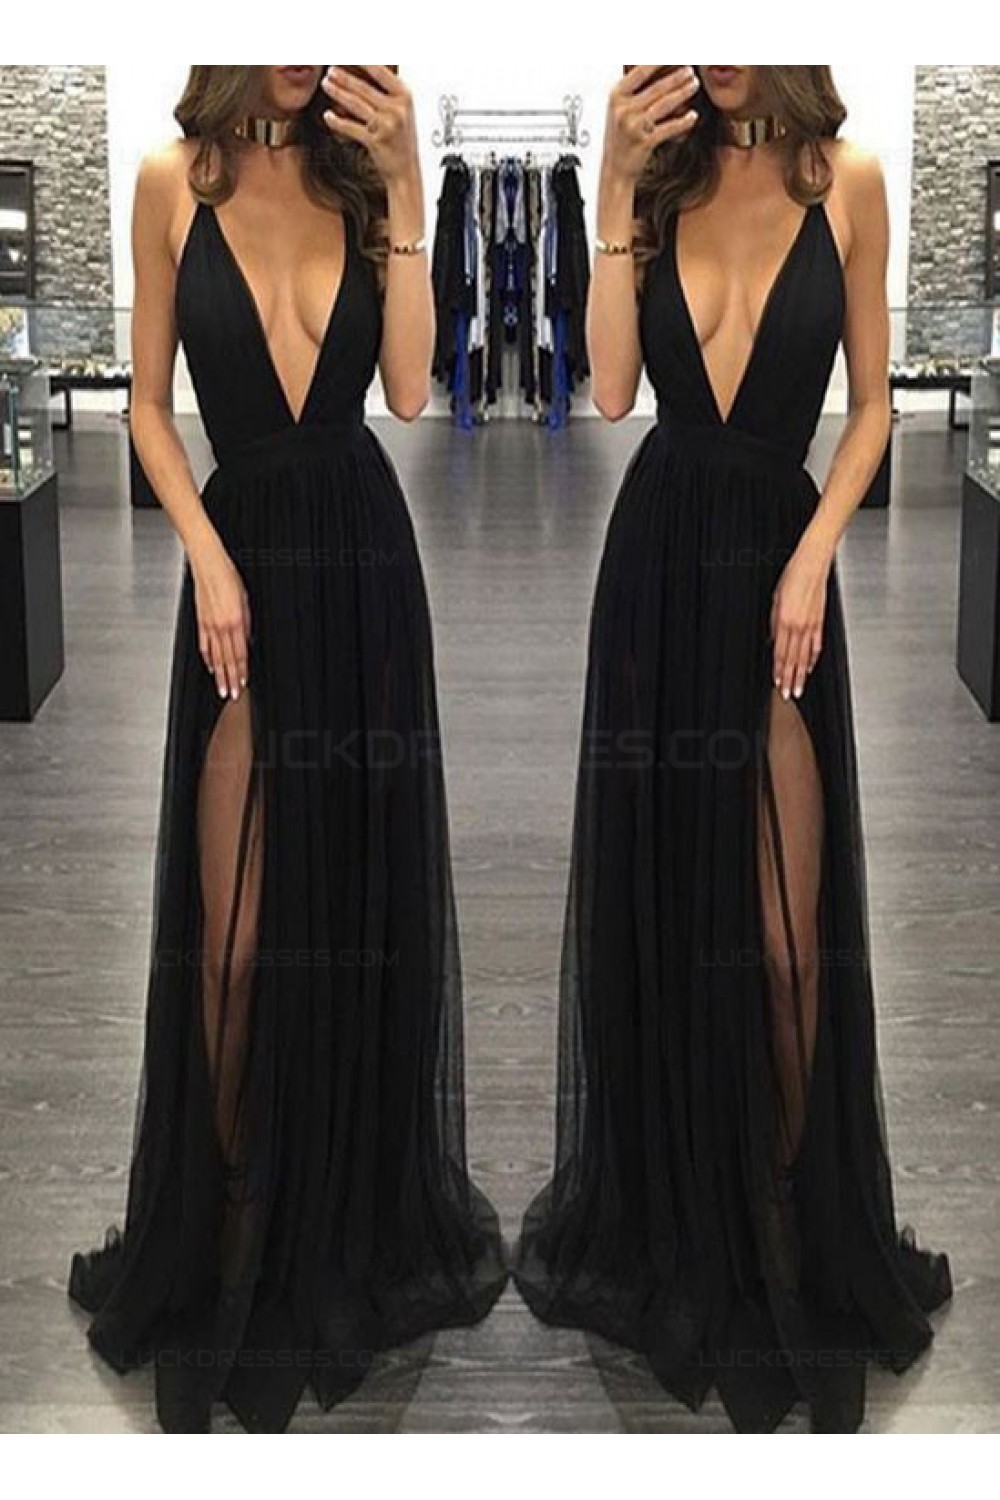 Sexy Low V-Neck Long Black Prom Dresses 